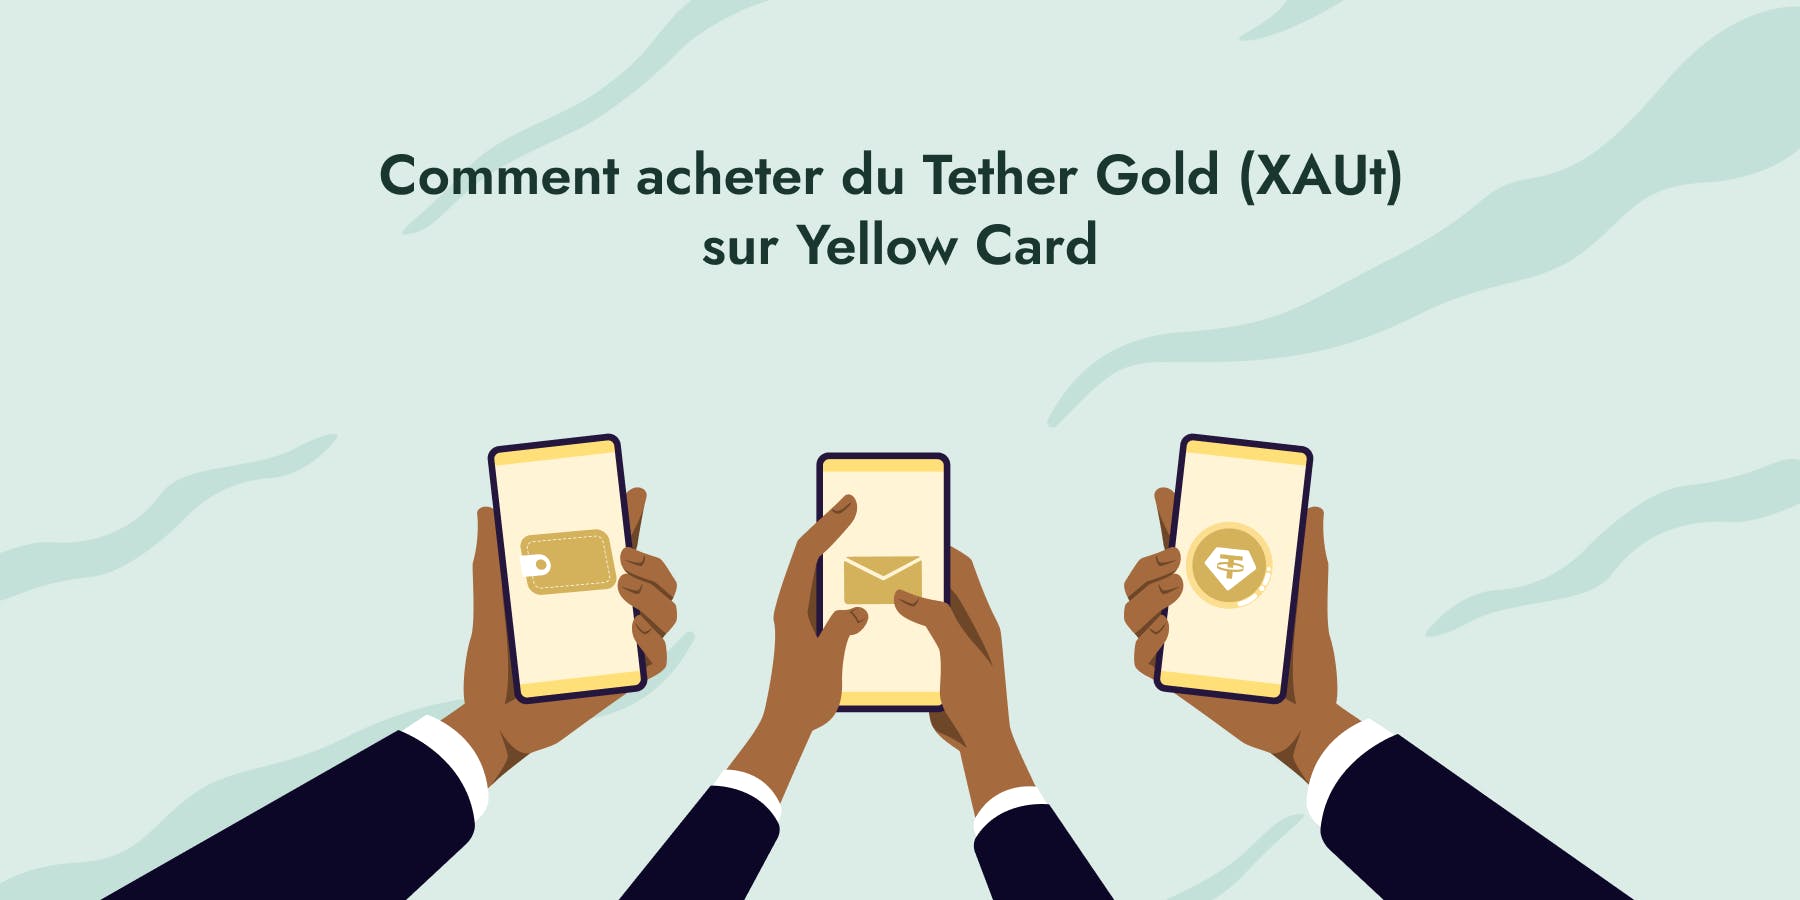 Comment acheter du Tether Gold (XAUt) sur Yellow Card